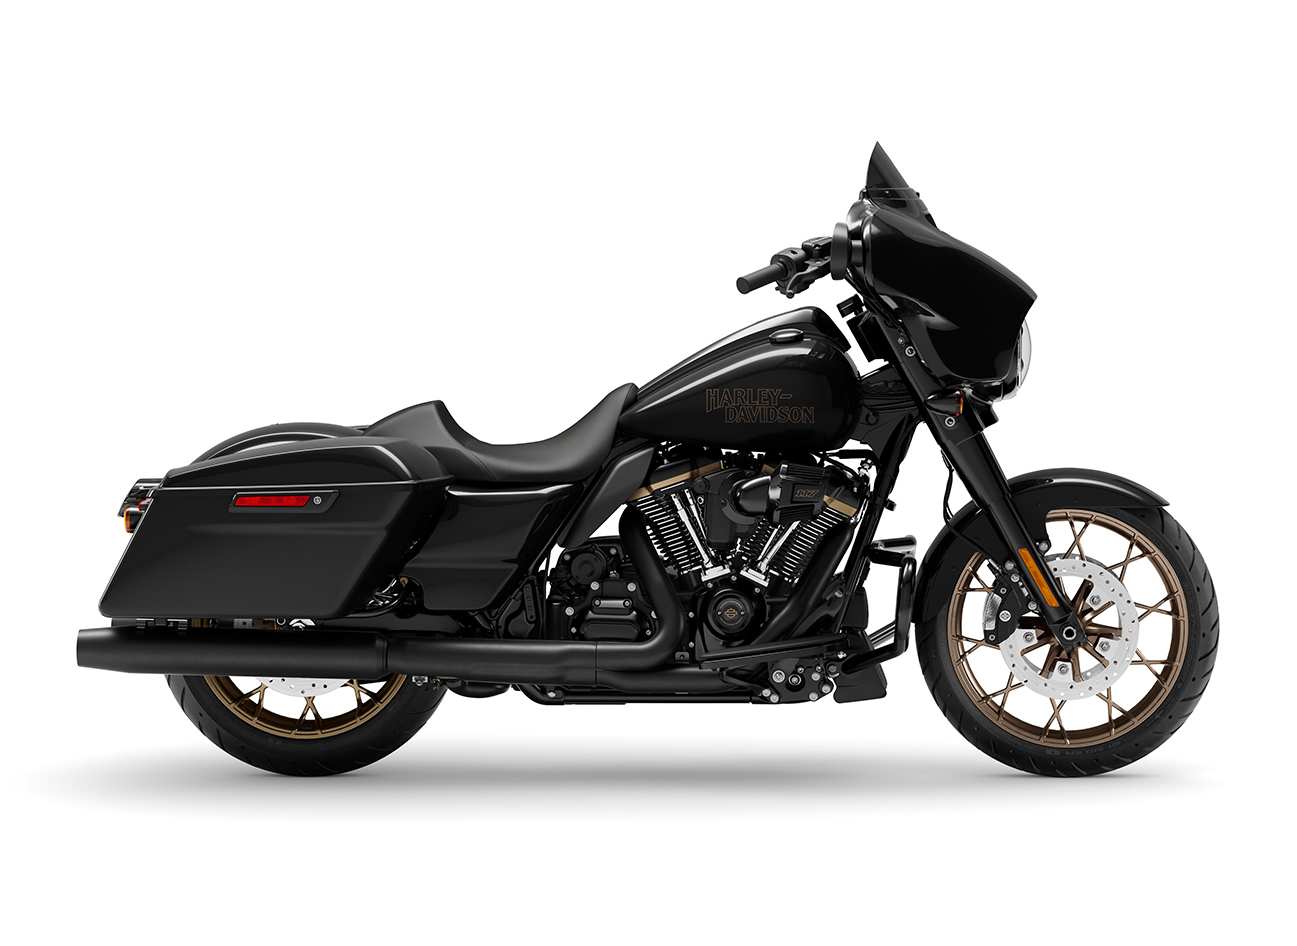 The all-new Harley-Davidson Street Glide ST